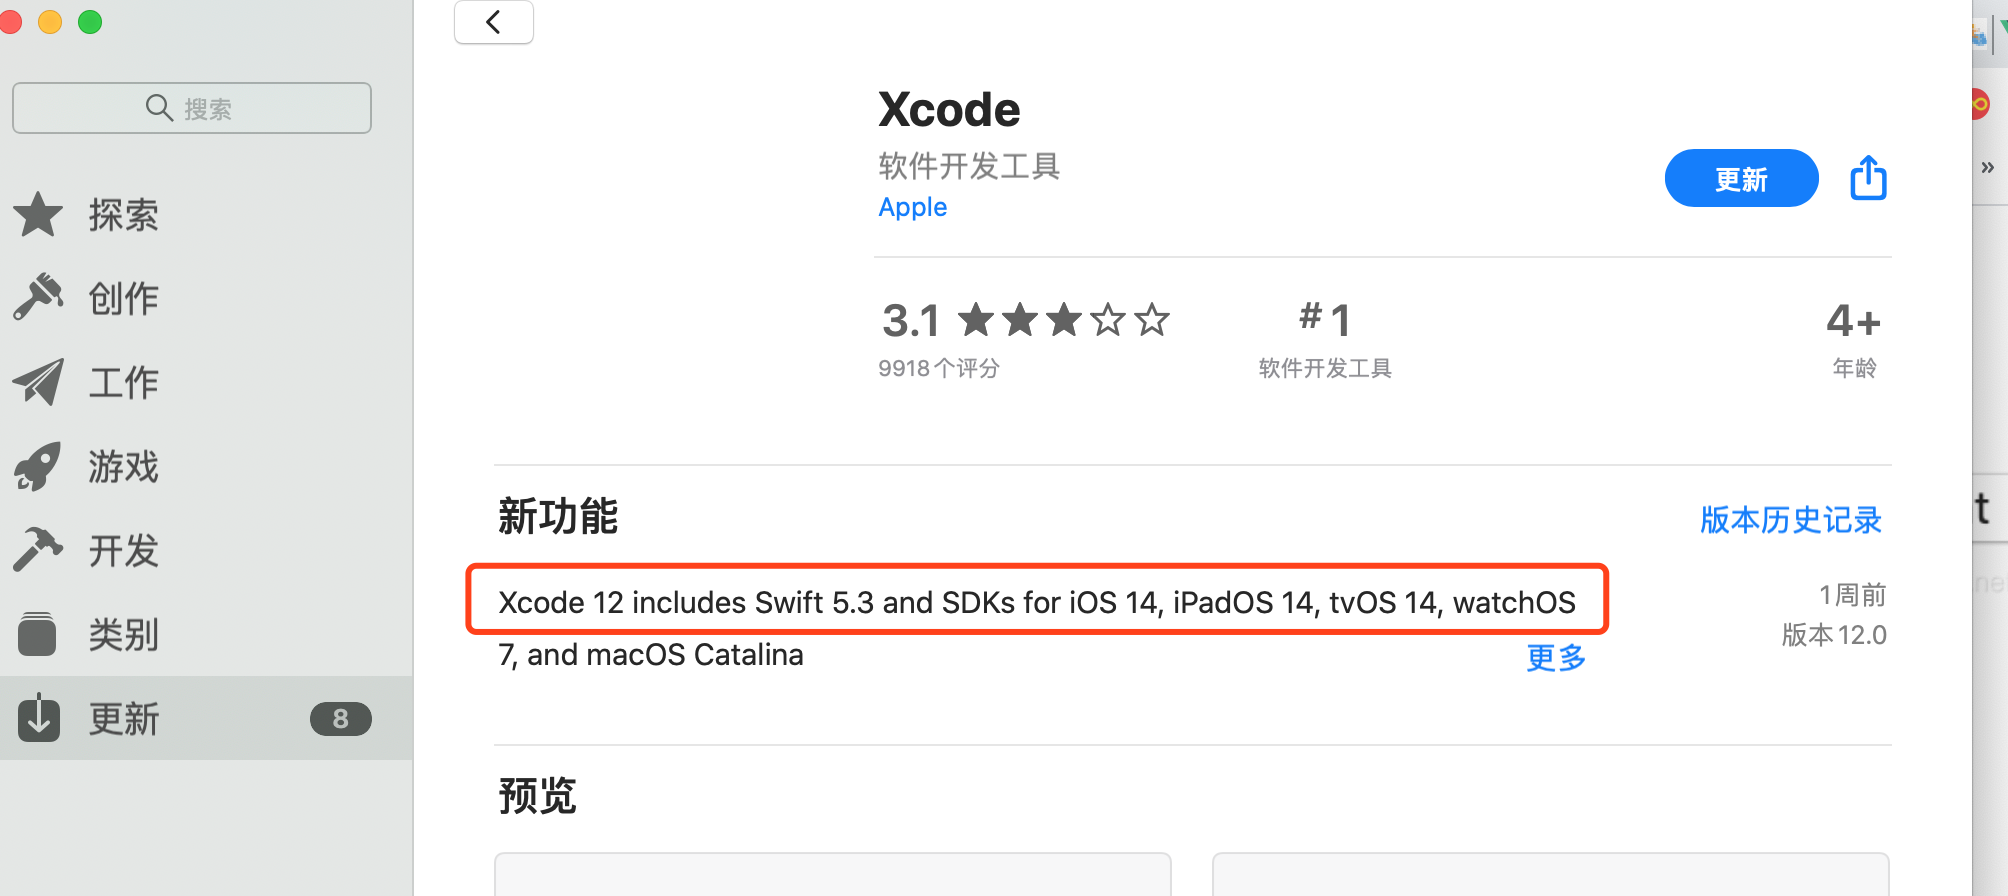 device orientation xcode 10.3